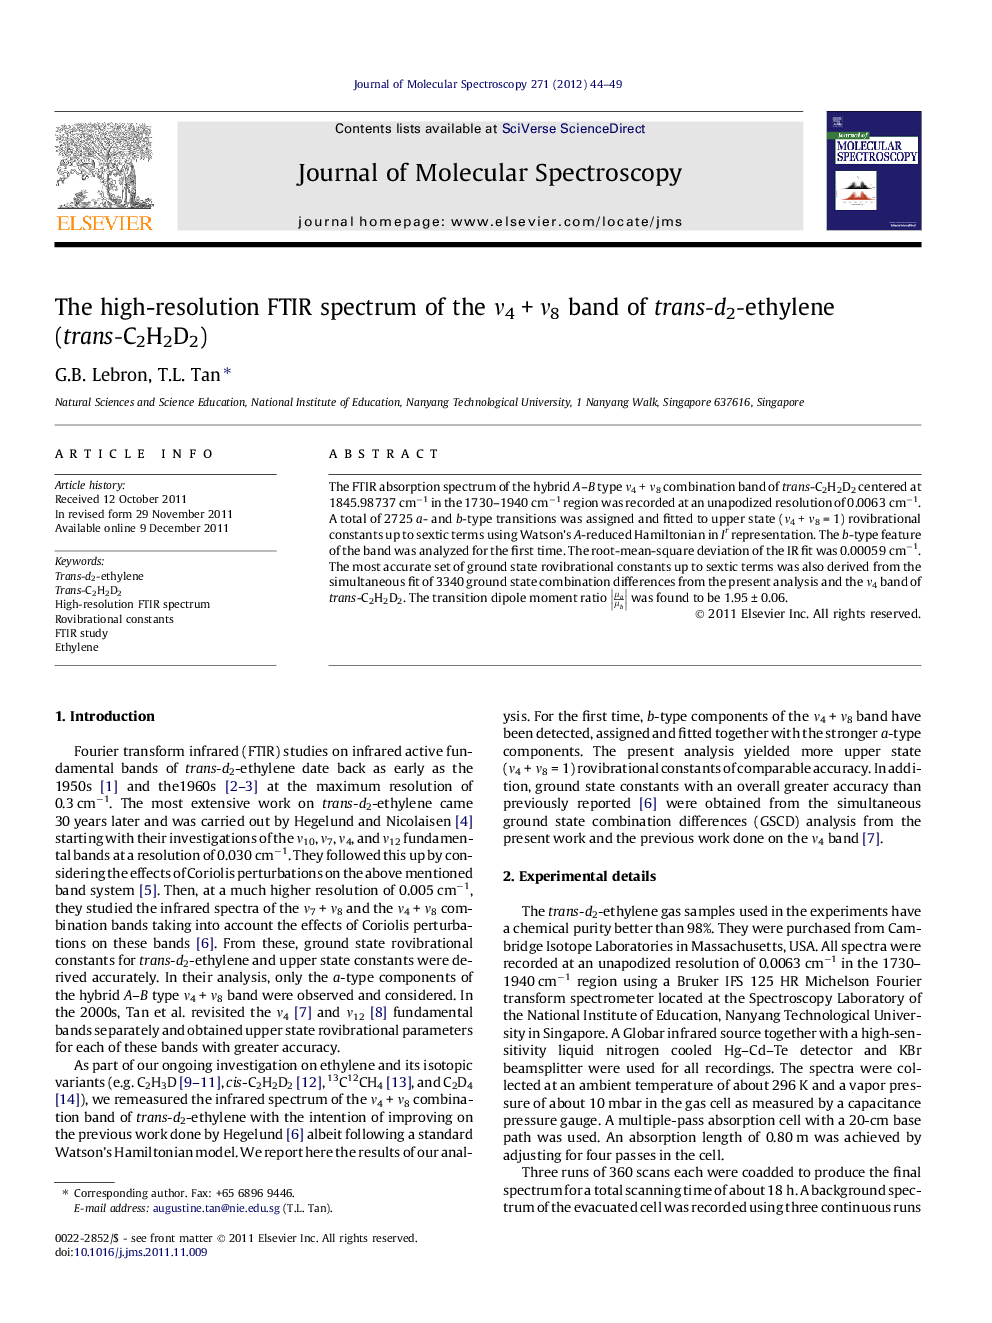 The high-resolution FTIR spectrum of the Î½4Â +Â Î½8 band of trans-d2-ethylene (trans-C2H2D2)